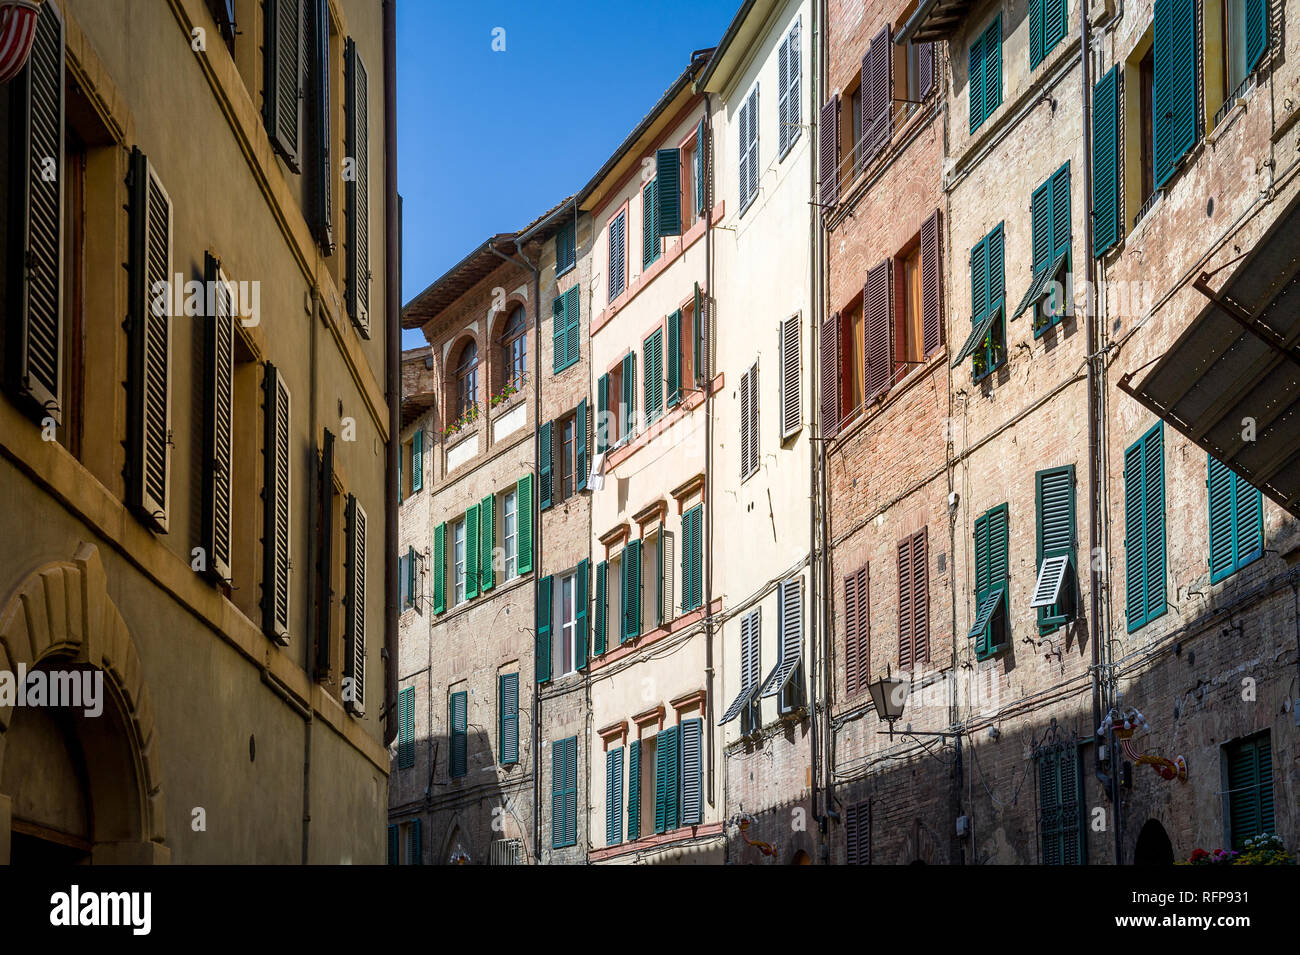 Siena lokalen Häusern street view mit traditionellen Windows. Toskana, Italien. Stockfoto